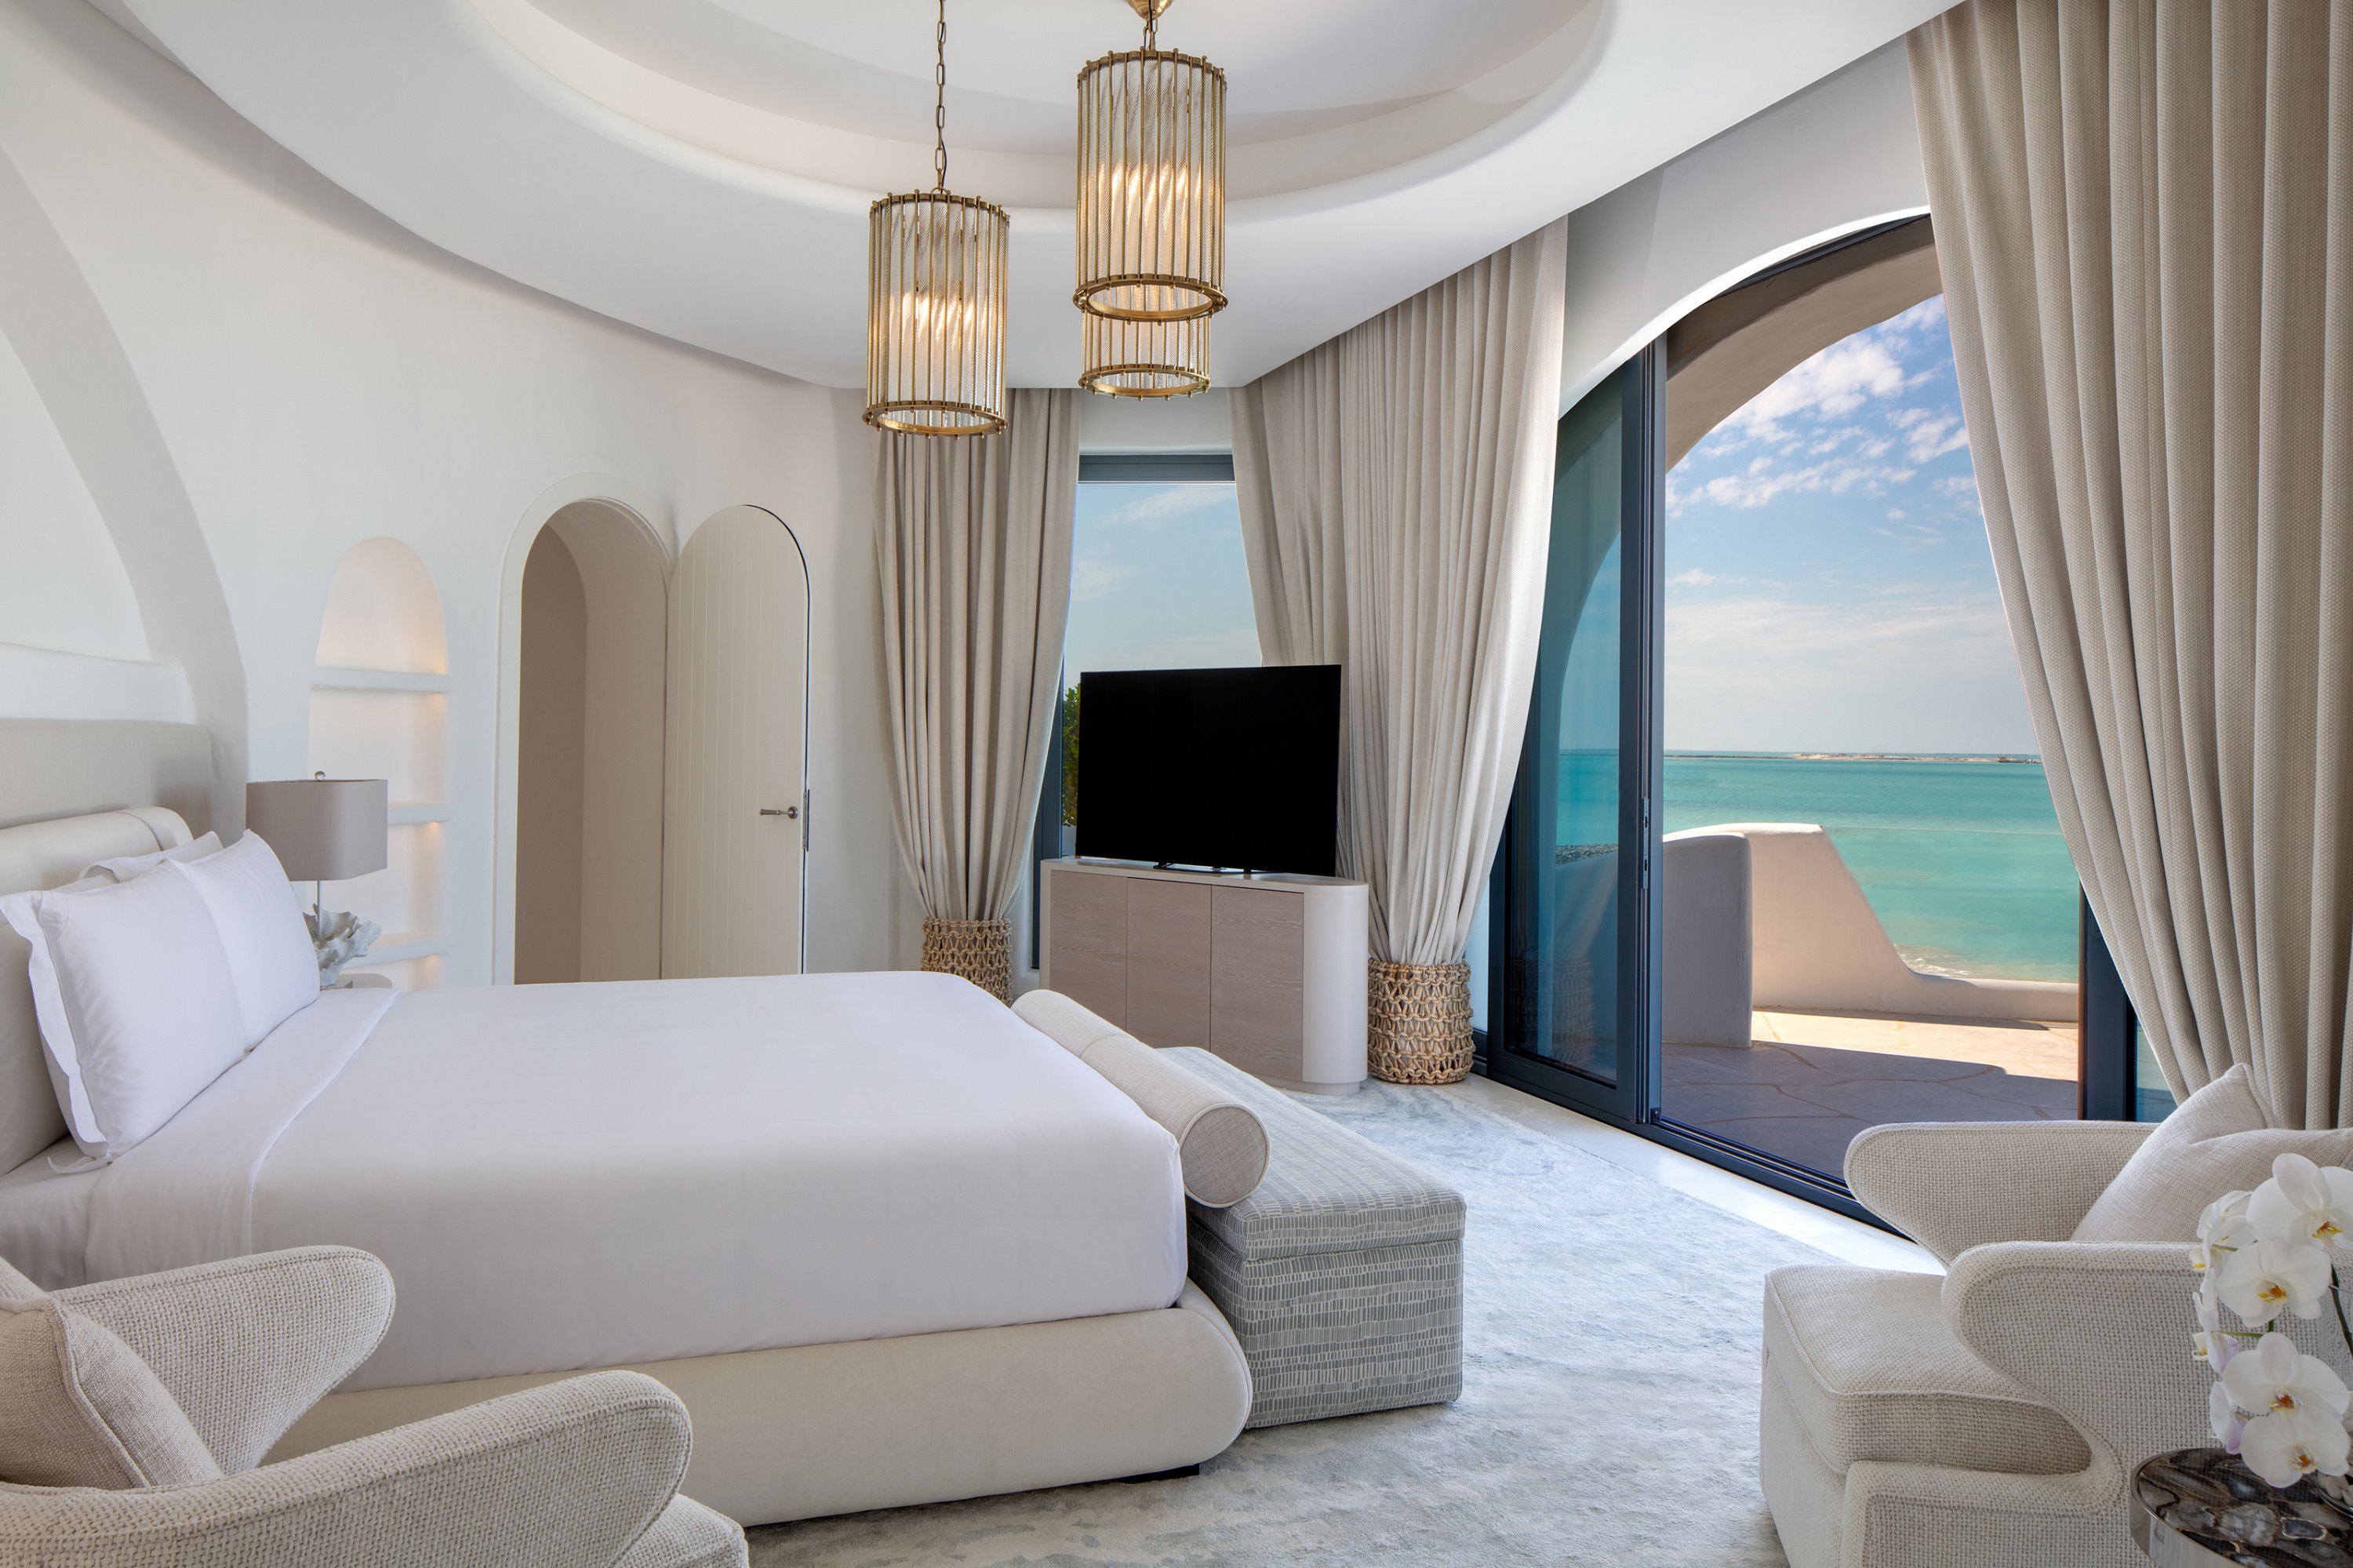 A 22-bedroom Santorini-inspired Anantara is opening in Abu Dhabi